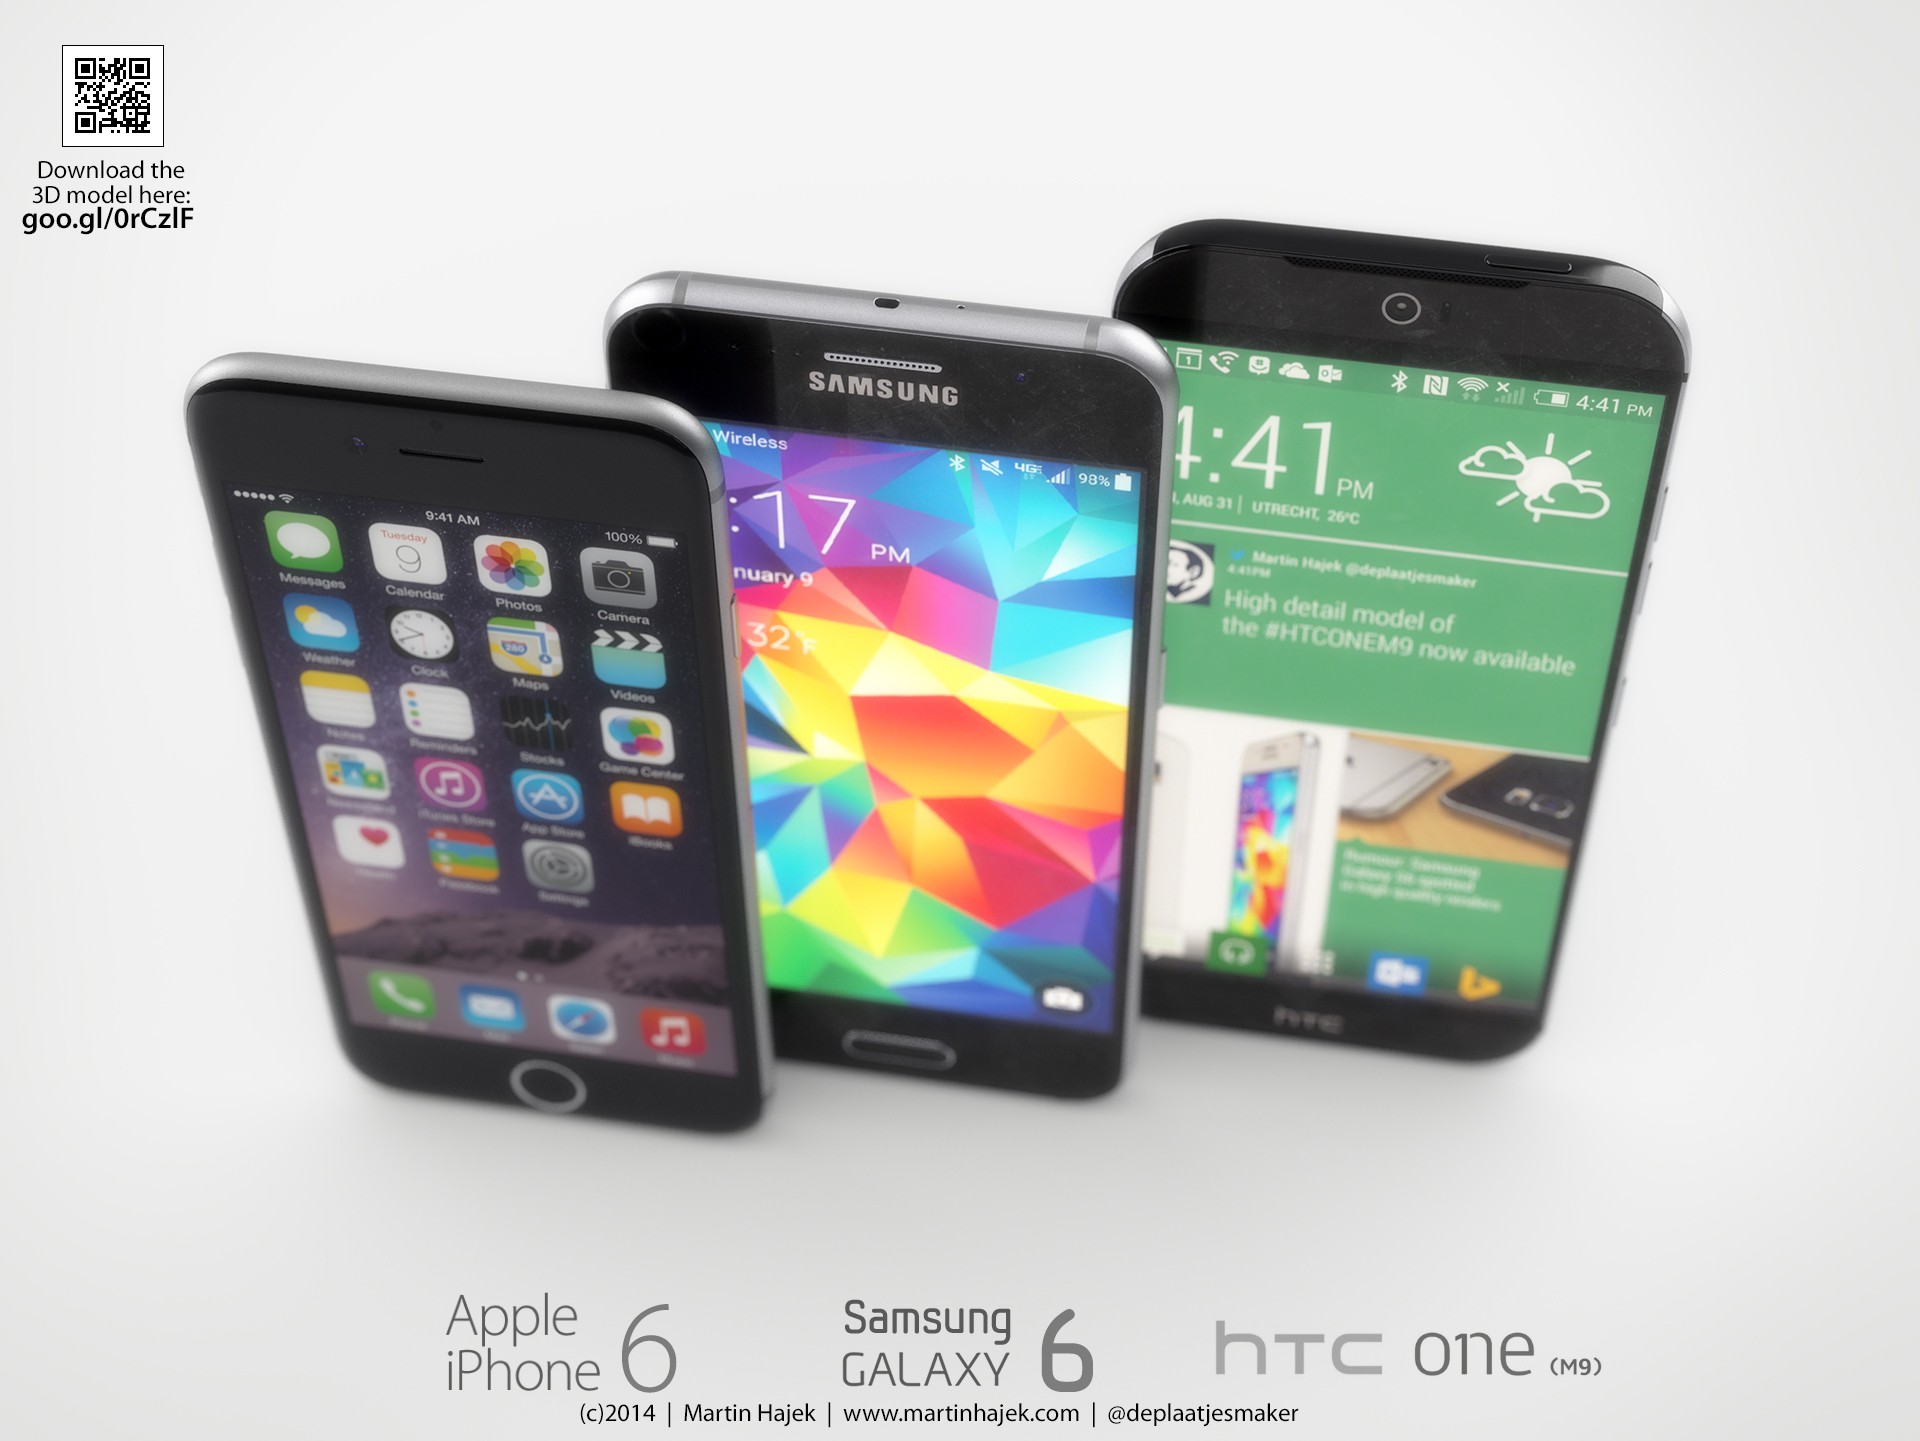 طرح مفهومی HTC One M9 در کنار گلکسی اس ۶ و آیفون ۶